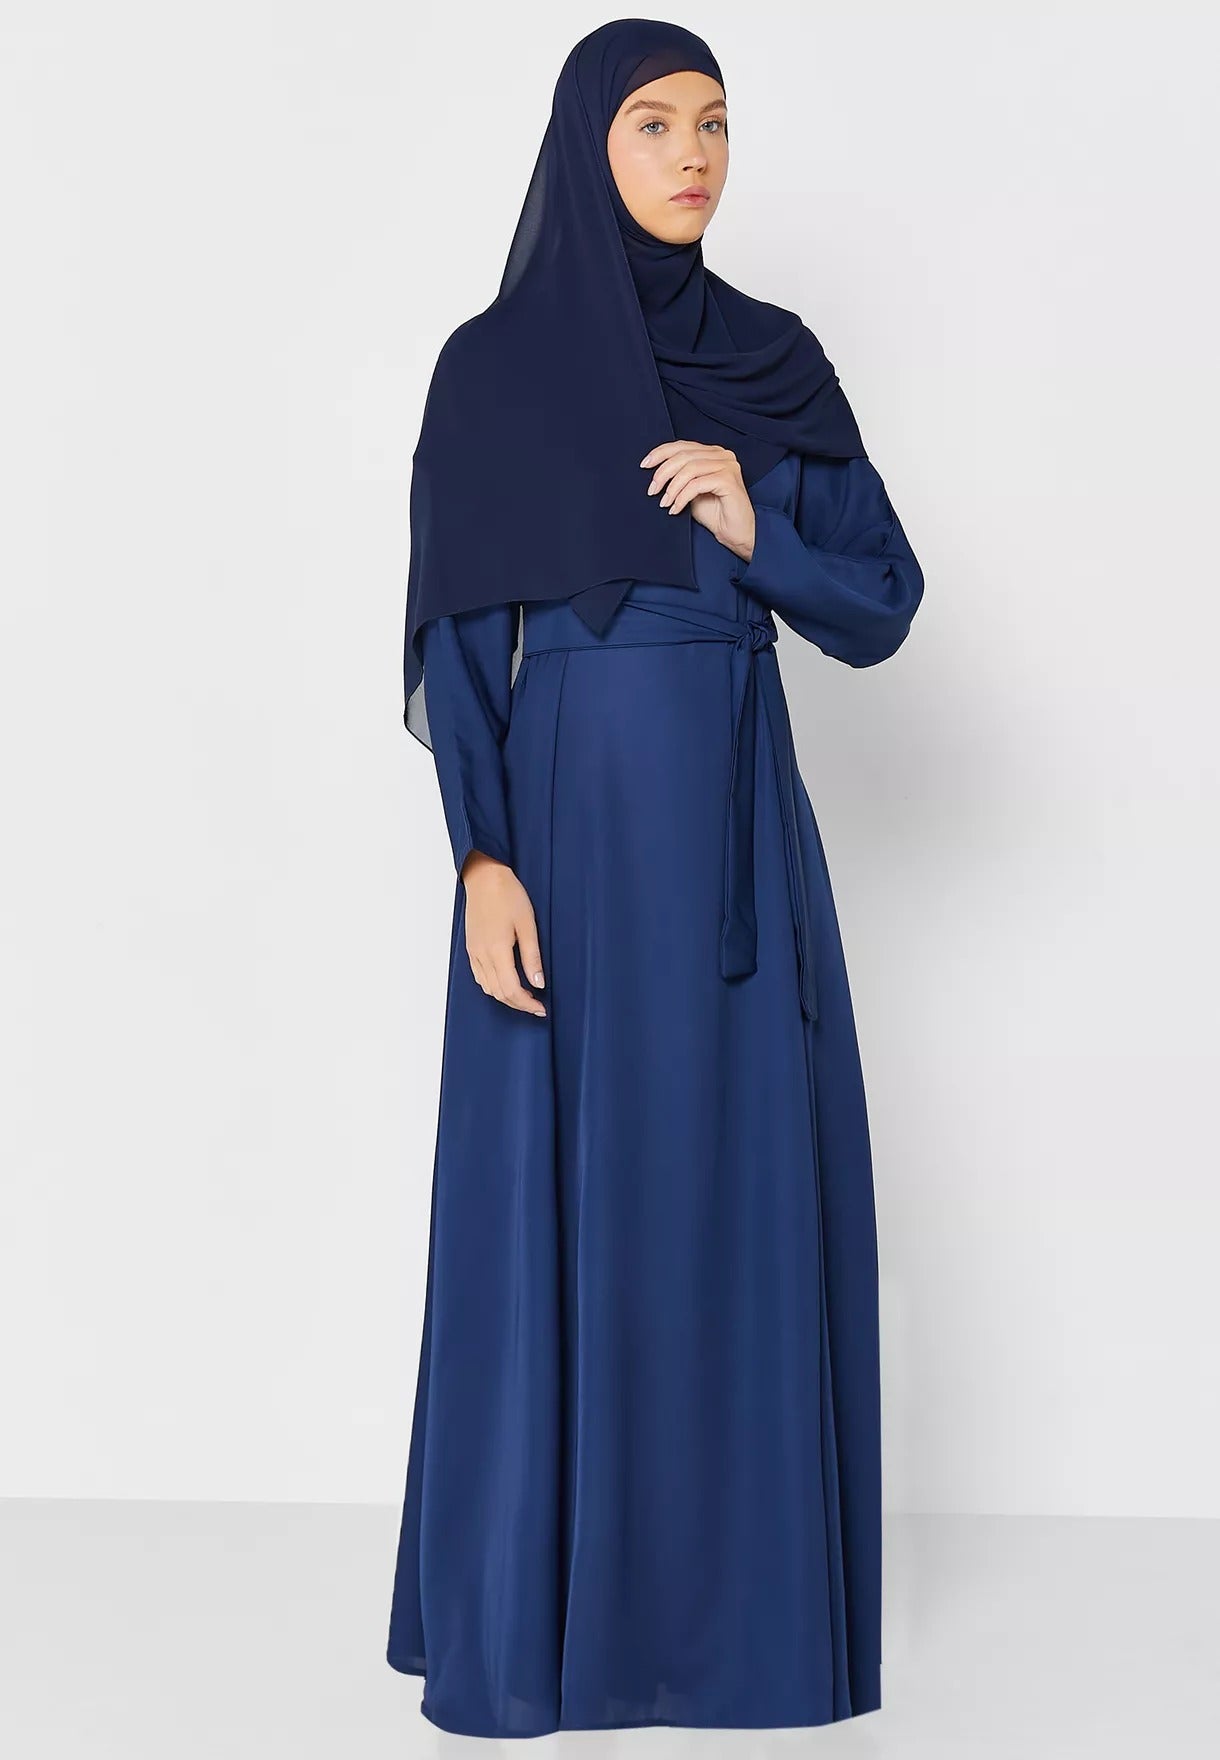 Premium full coverage islamic clothing-N27P-N27P